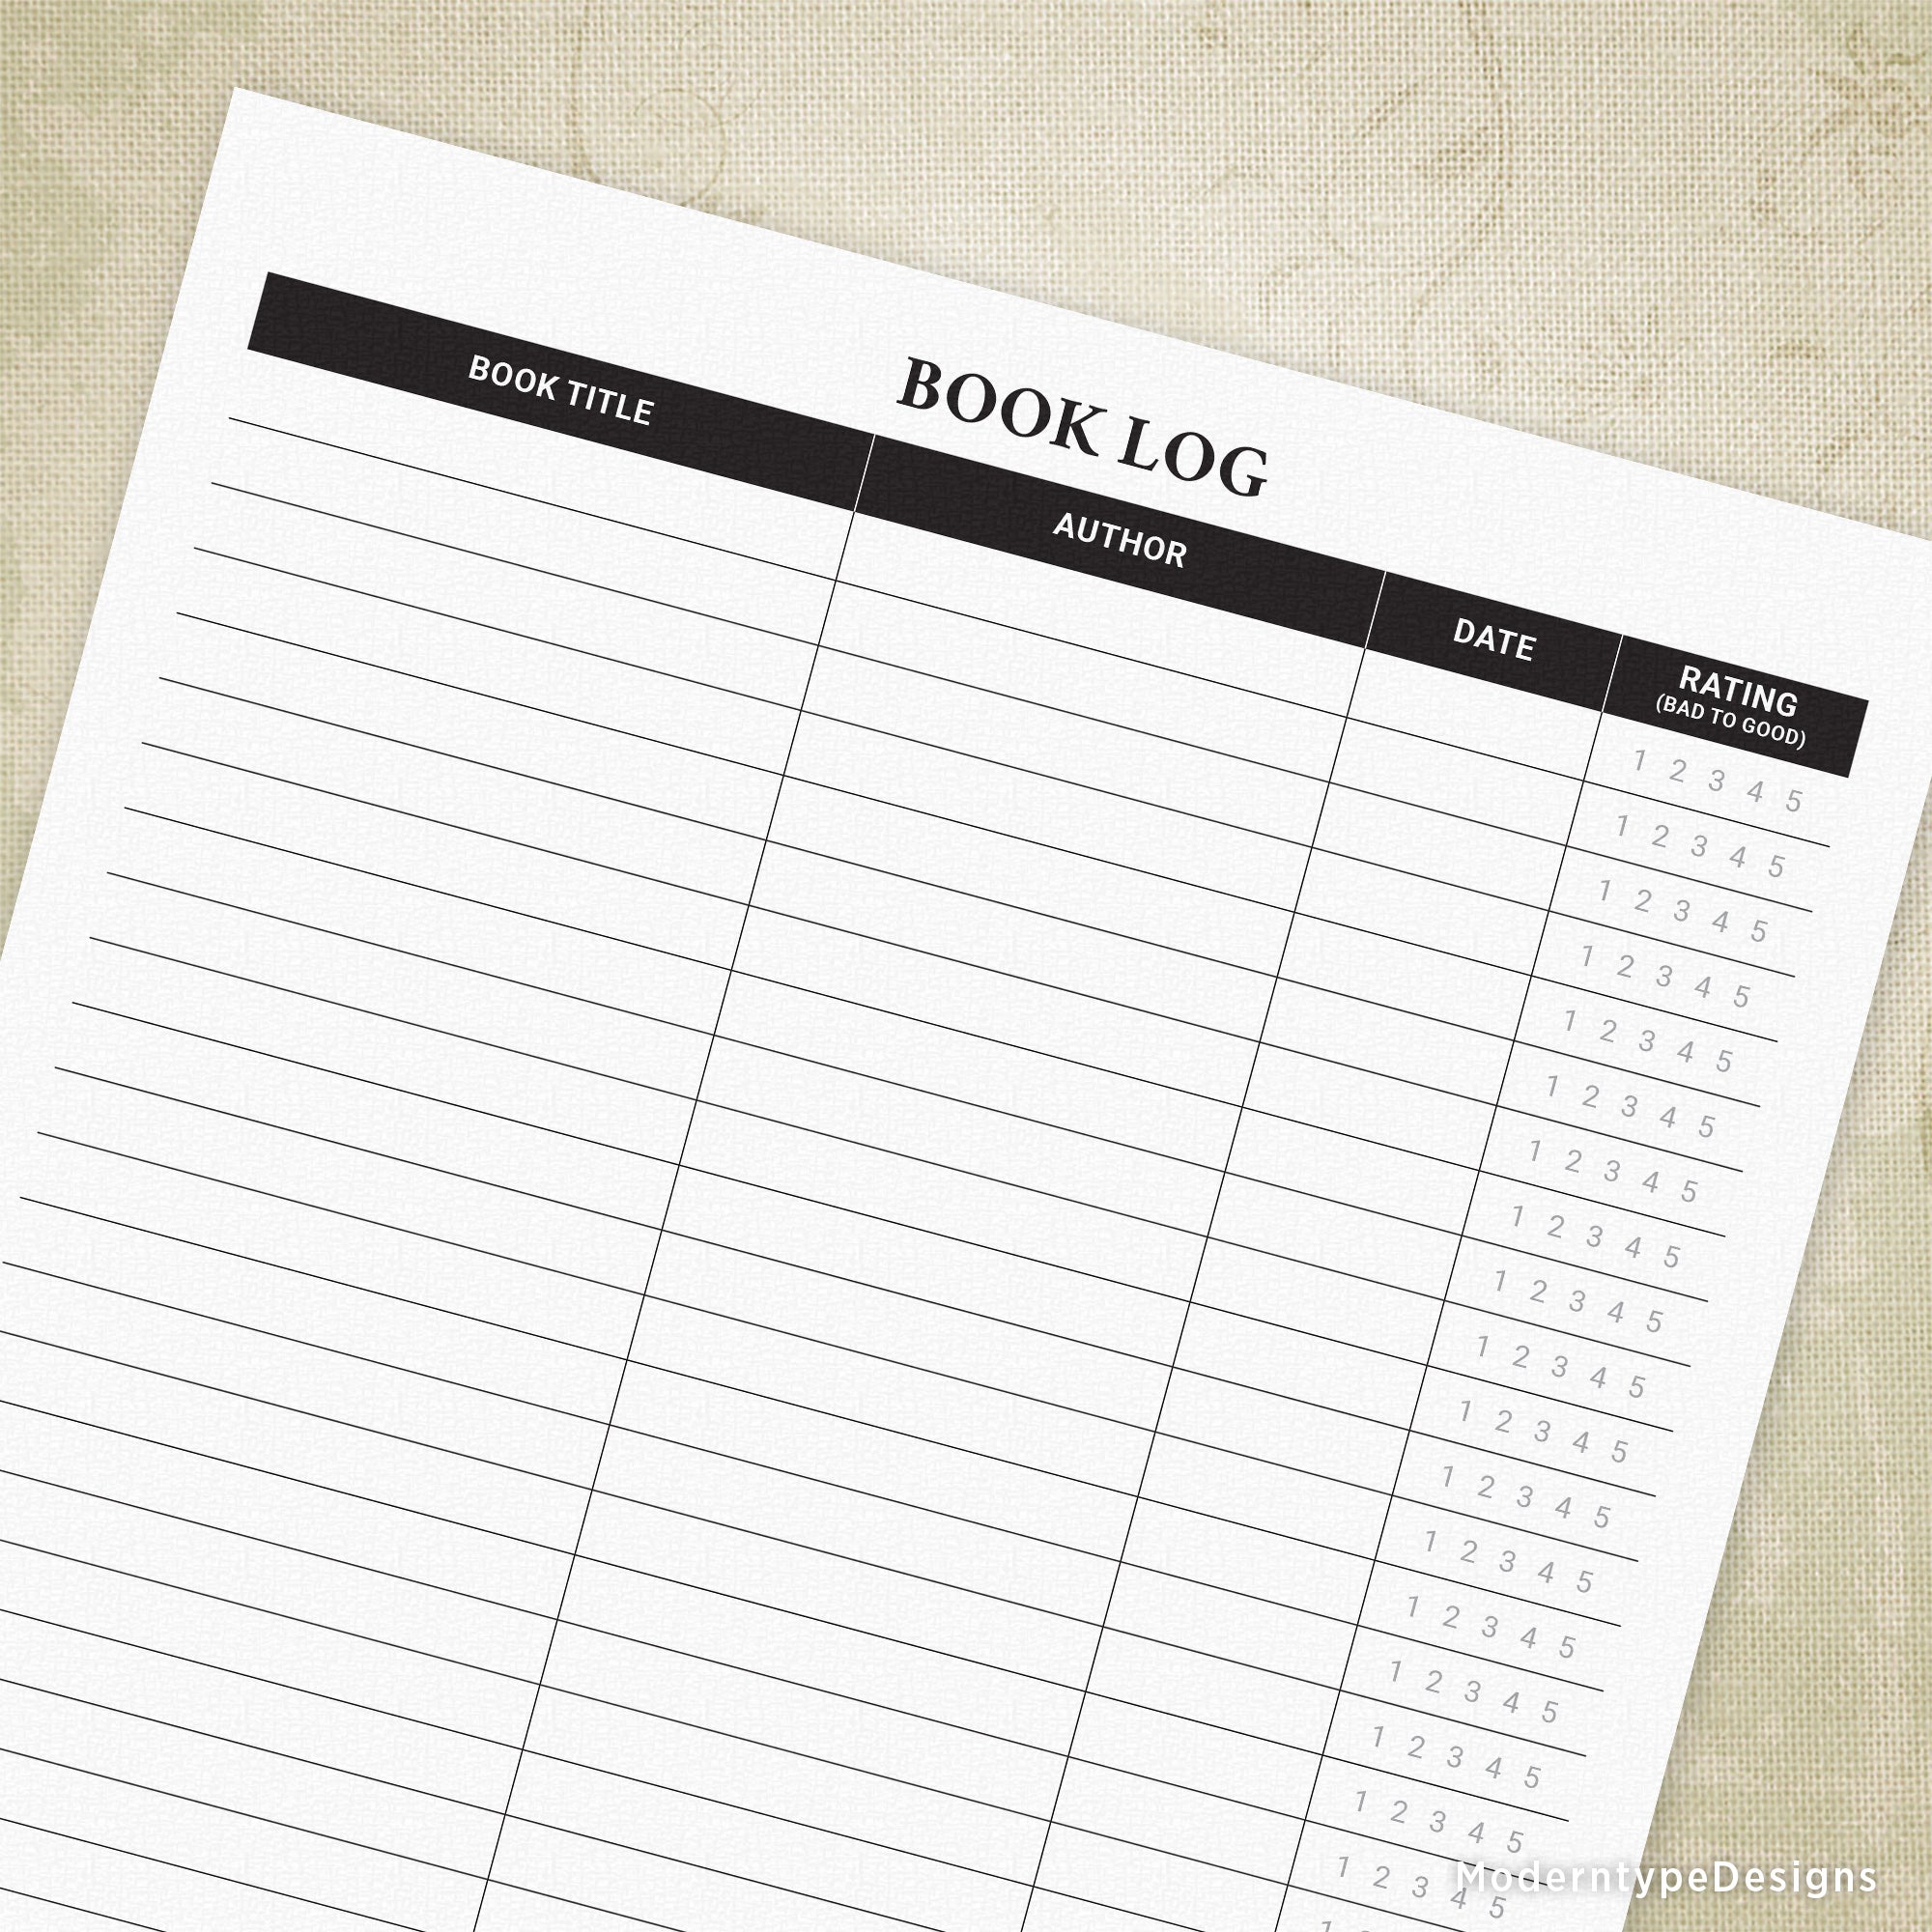 Book Log with Rating Printable Form